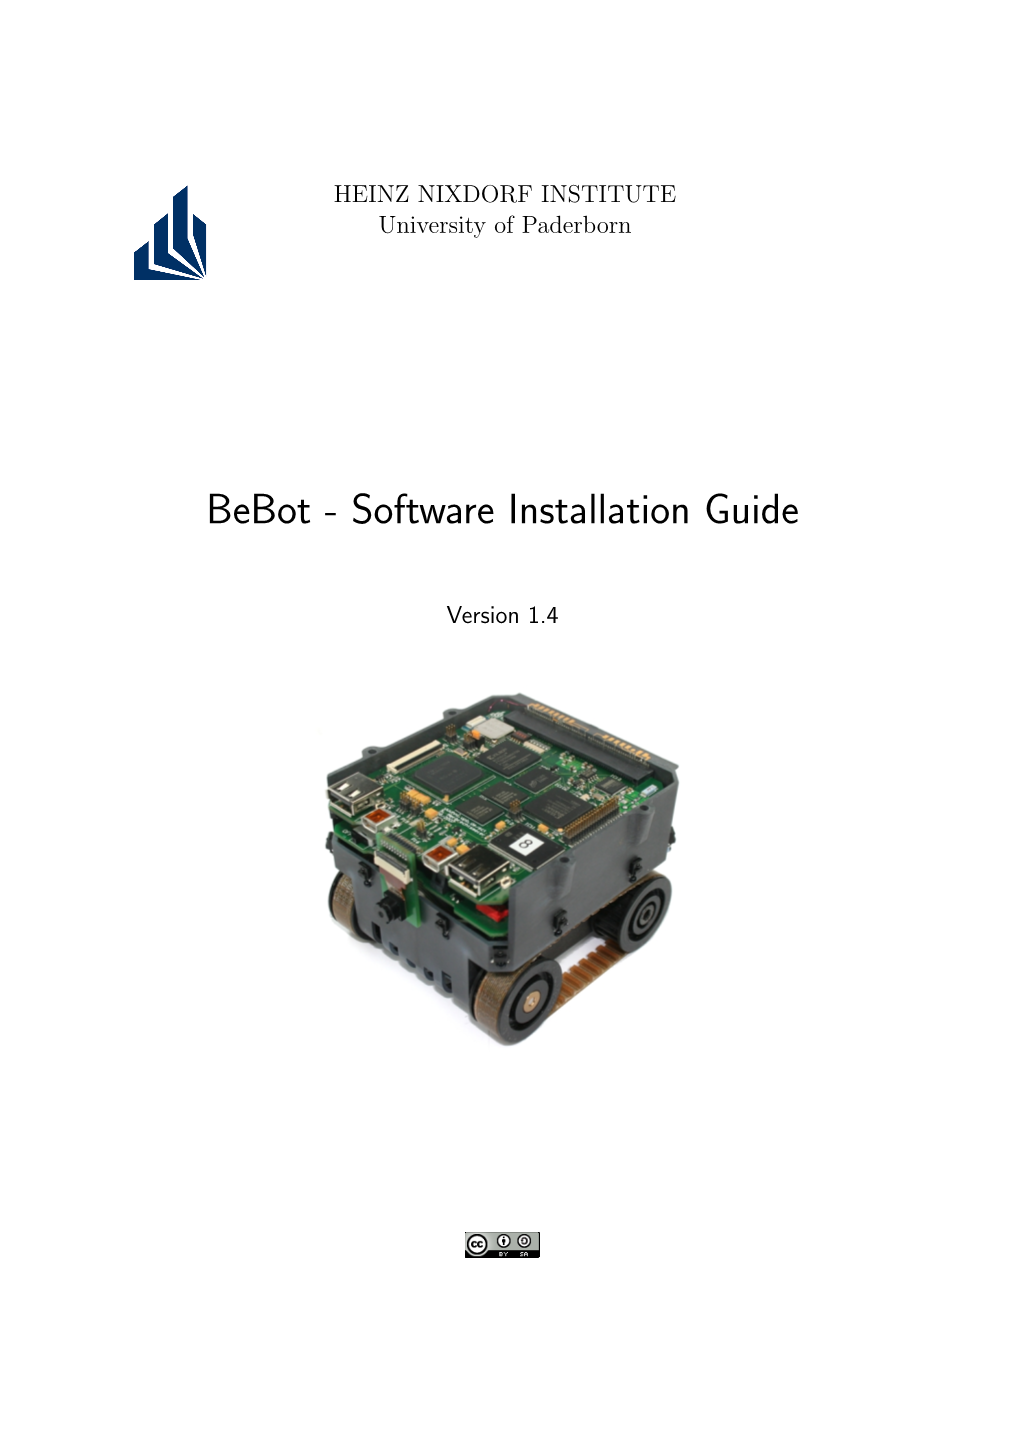 Bebot - Software Installation Guide